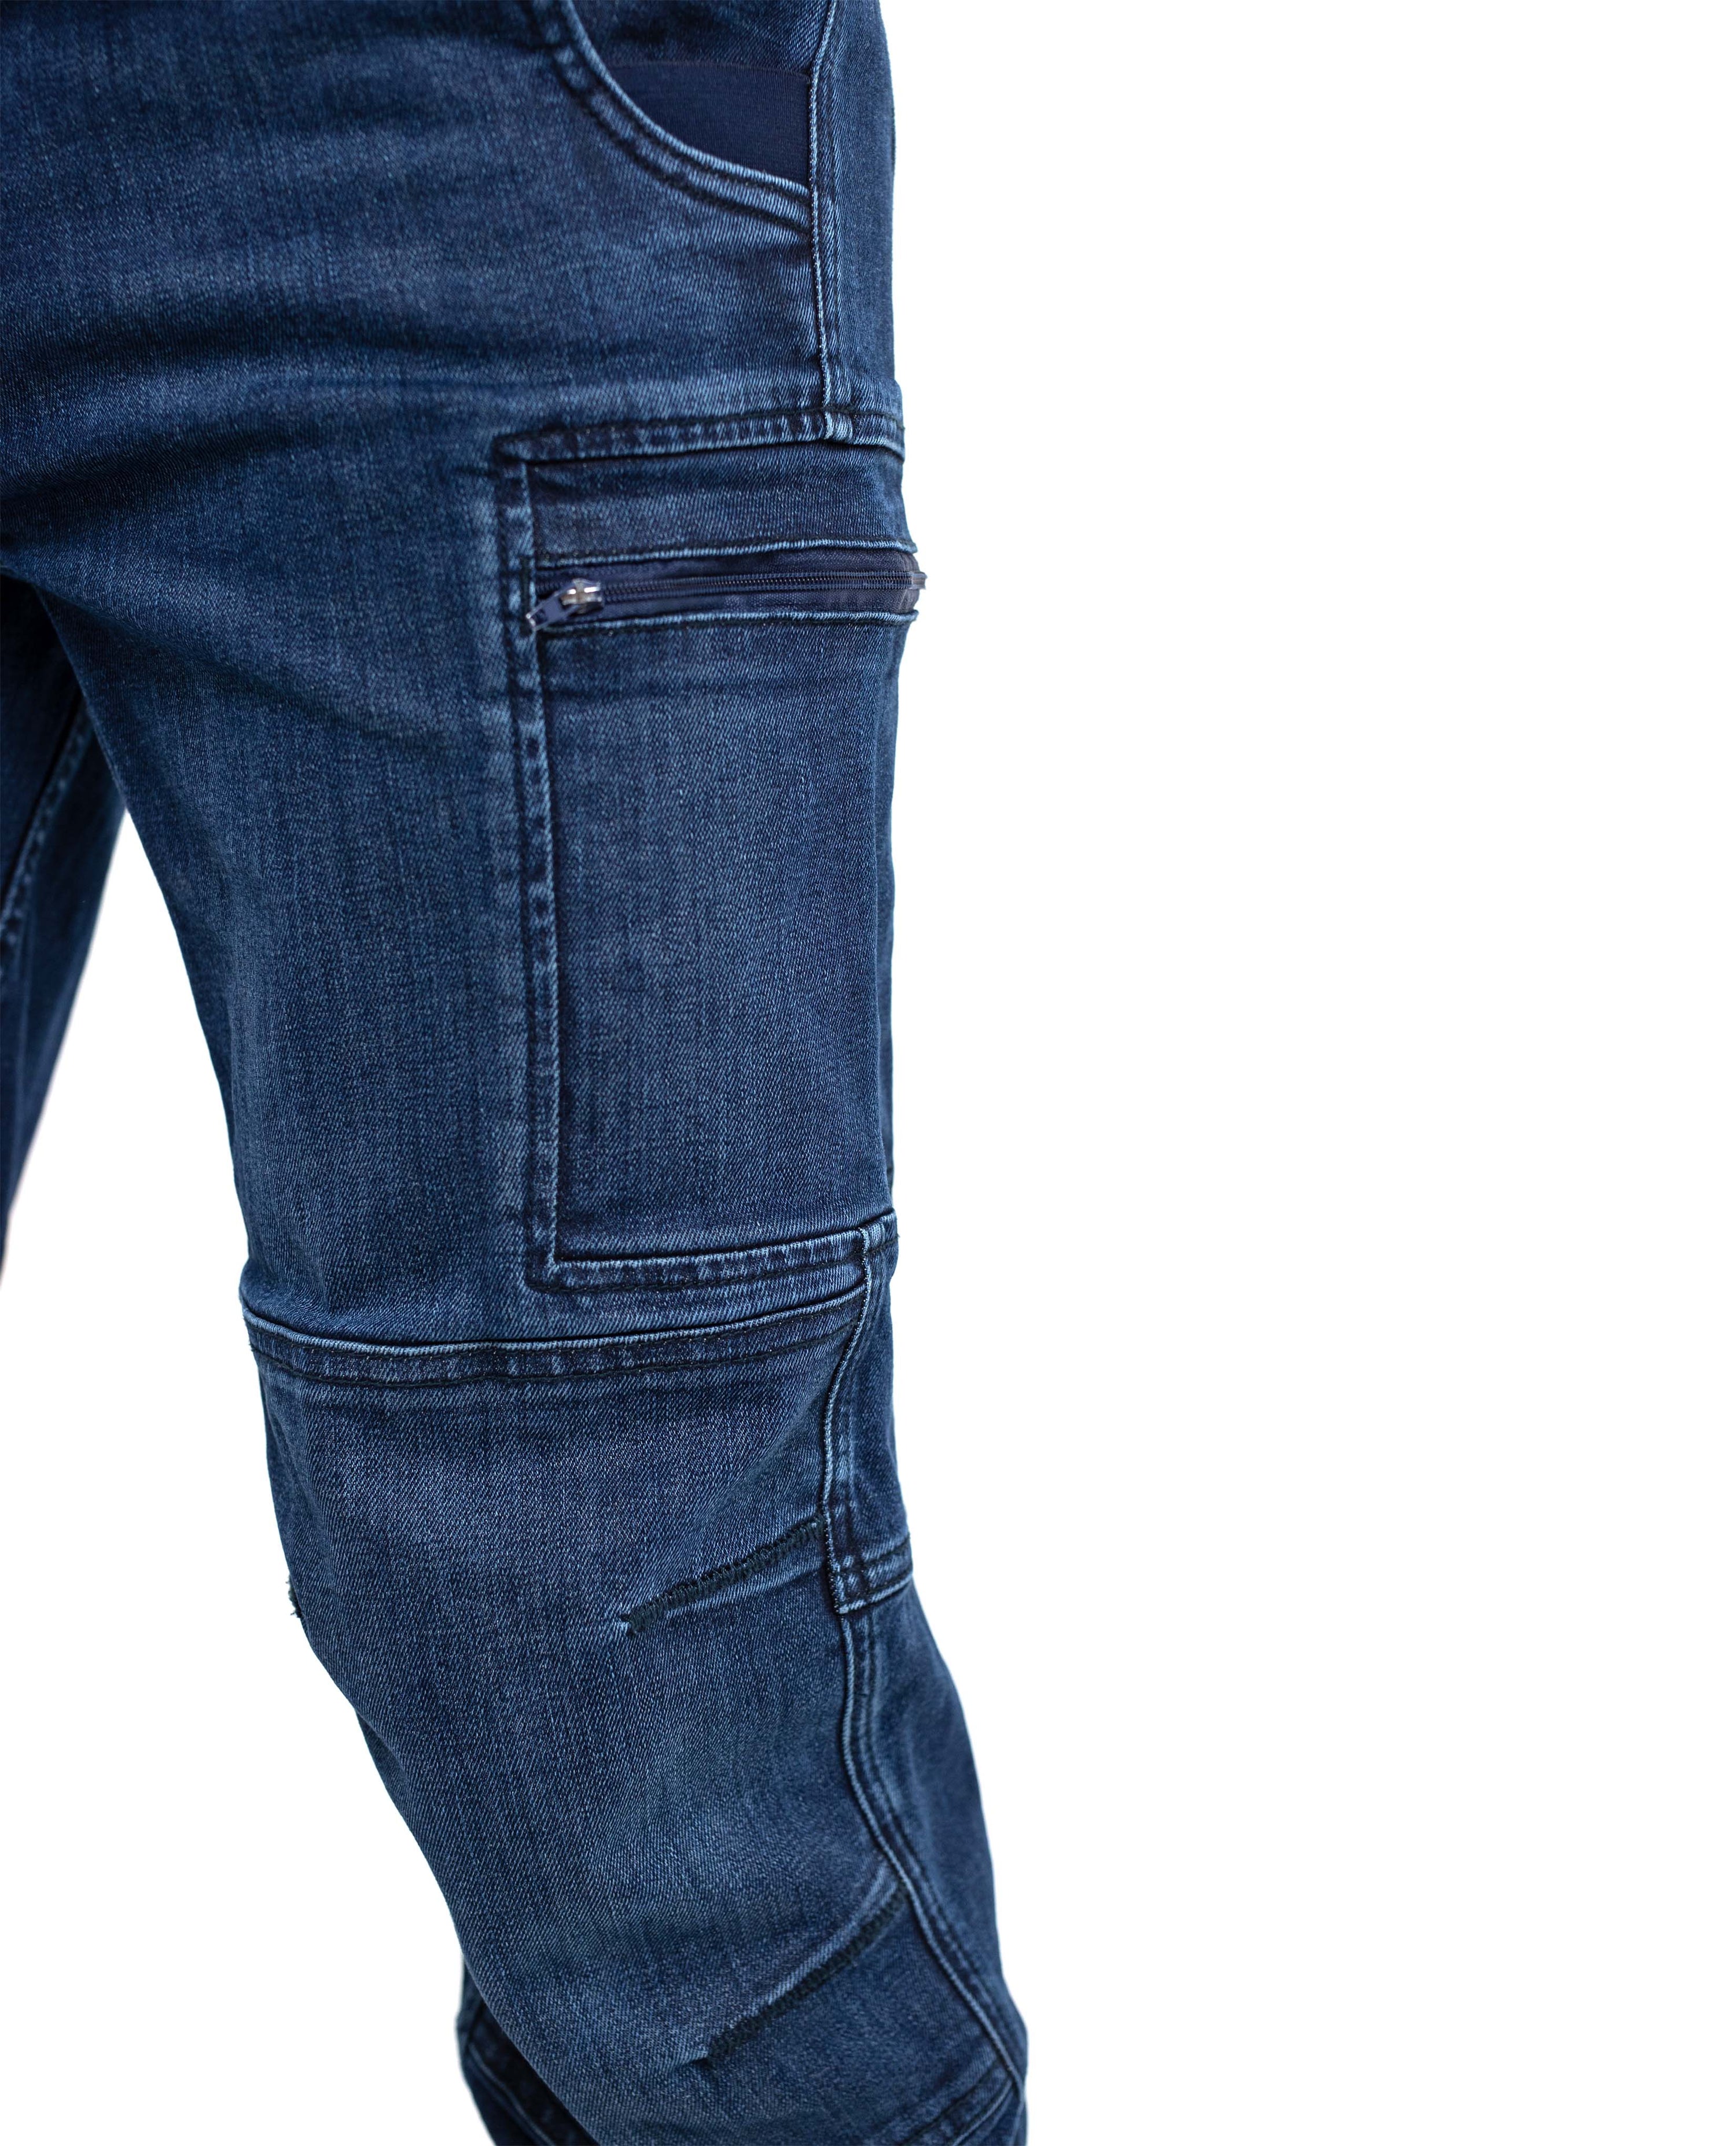 Men's Performance Jeans Indigo – Ripton